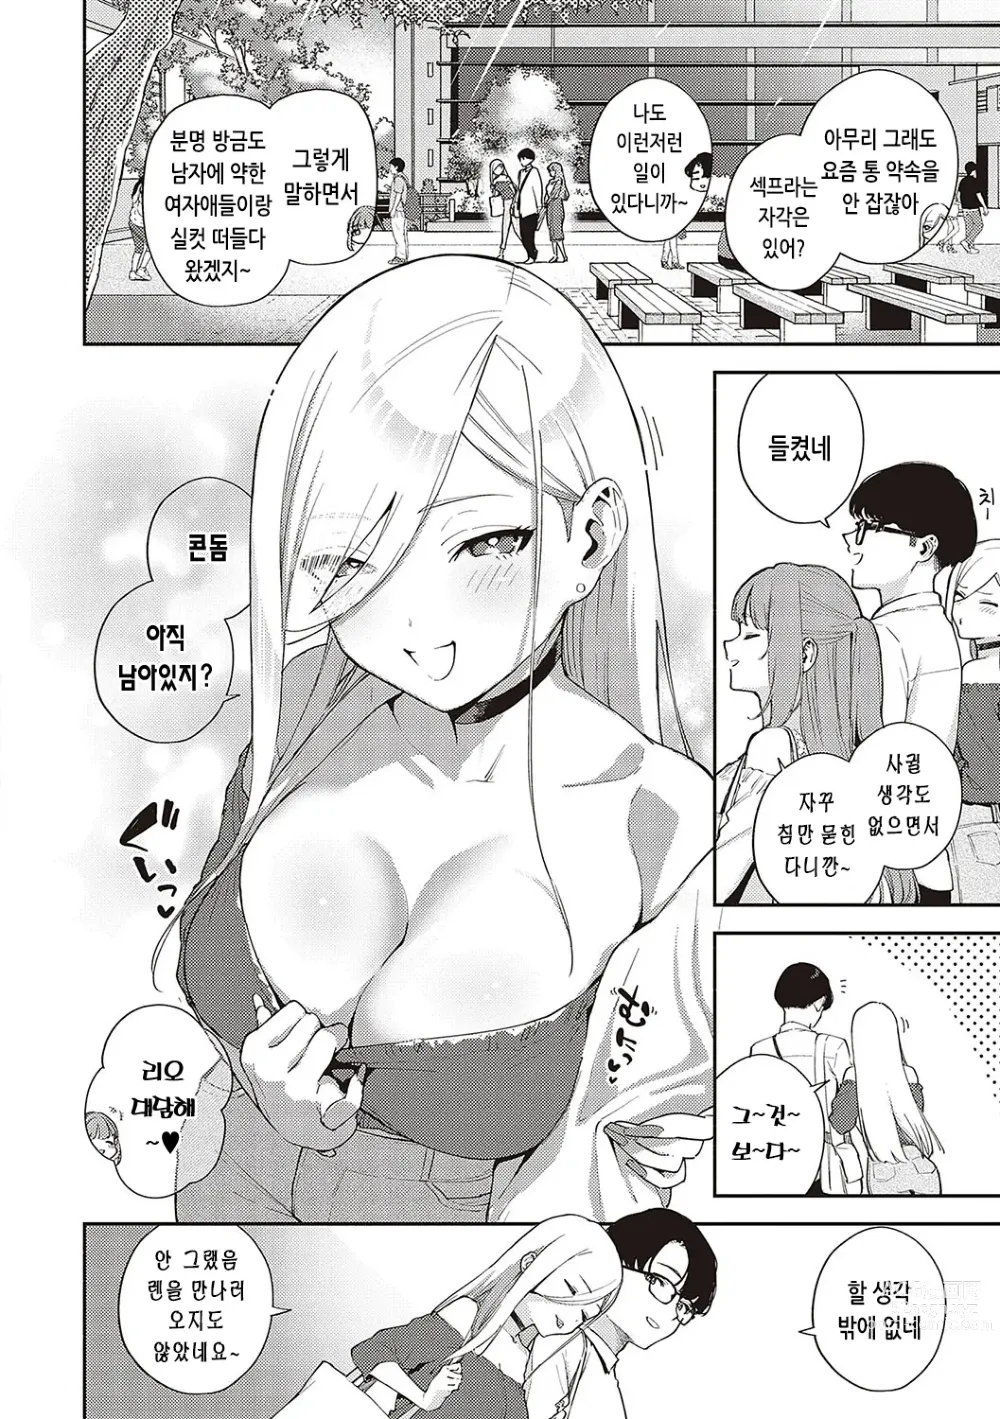 Page 5 of manga 비터스위트 콤플렉스